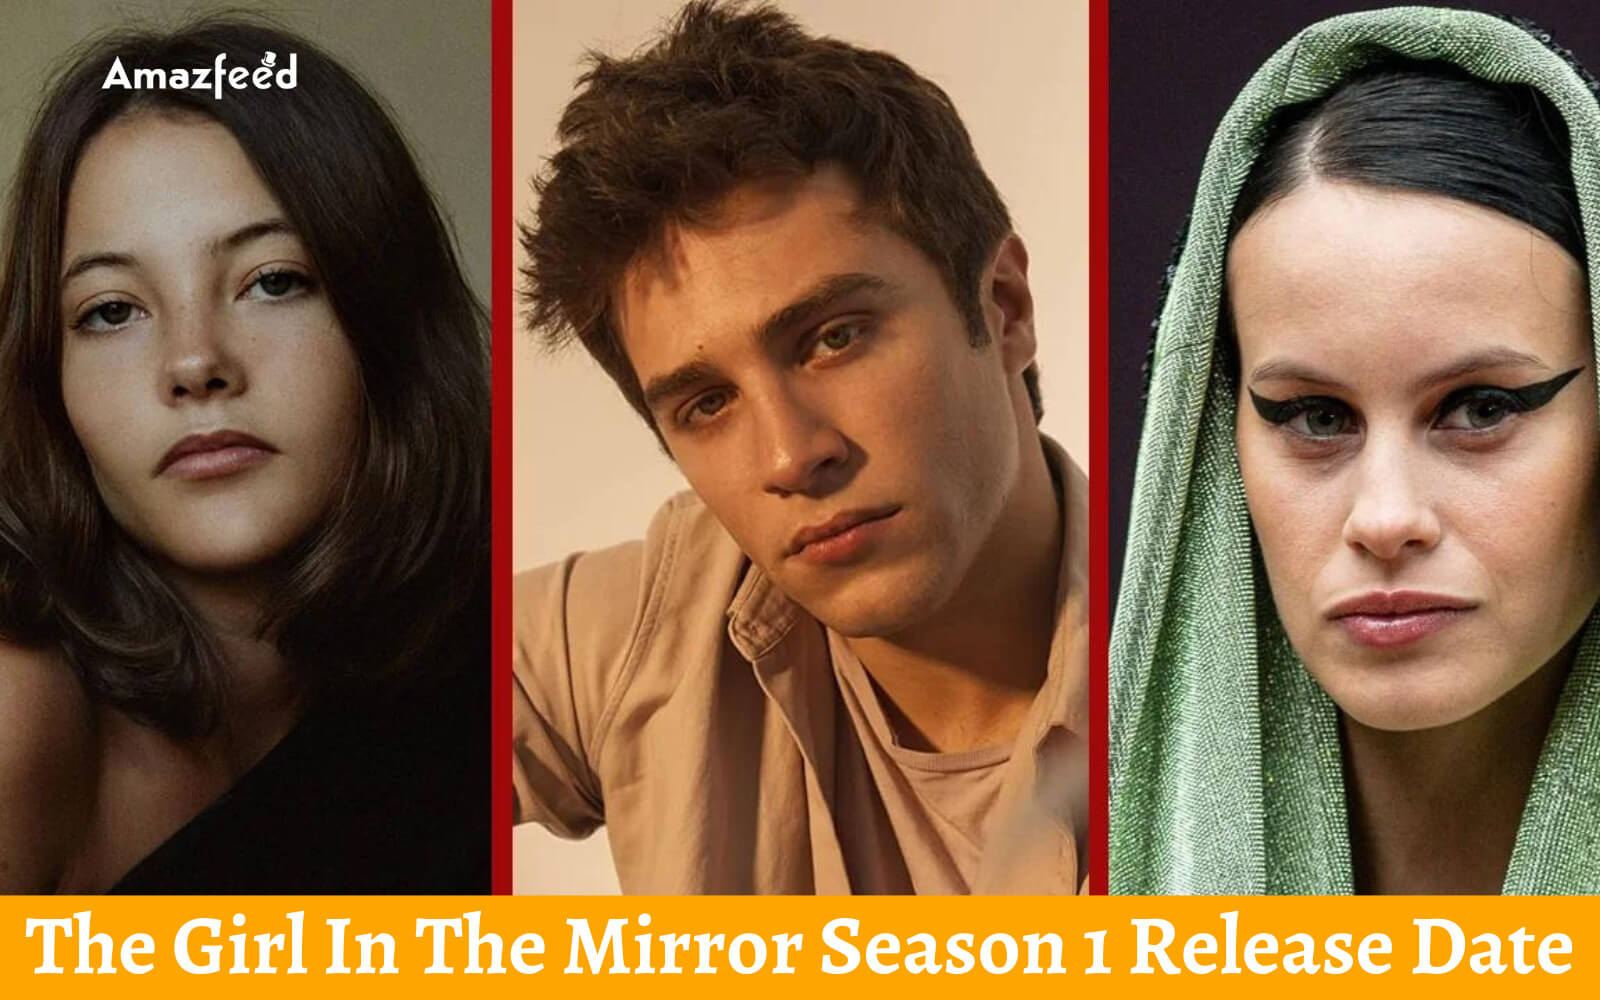 The Girl In The Mirror Season 1 Release Date